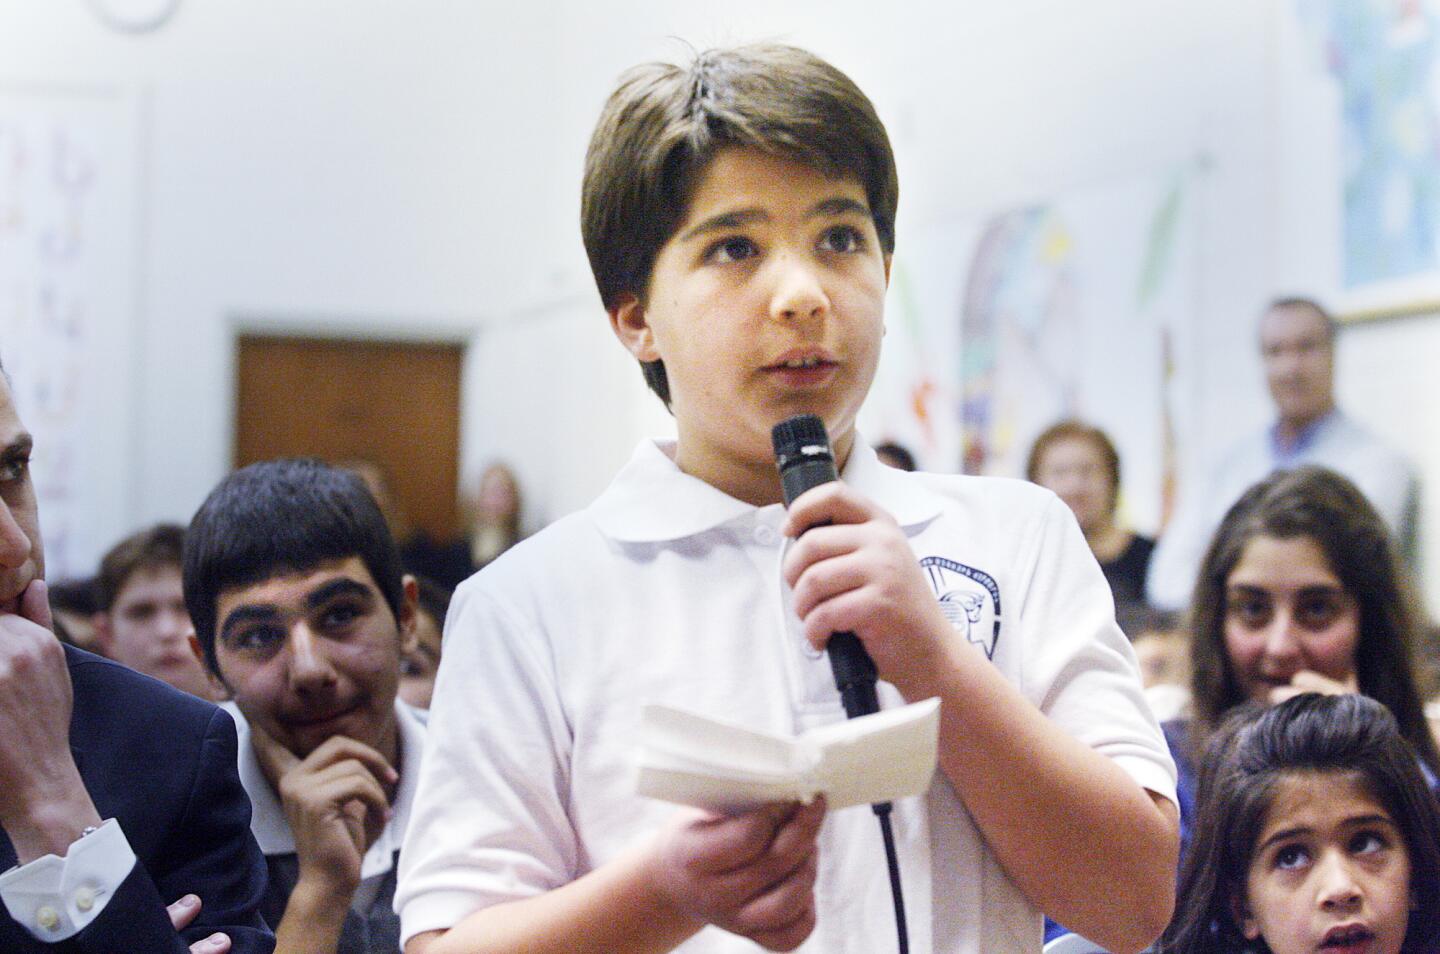 Astronaut speaks at a Glendale school